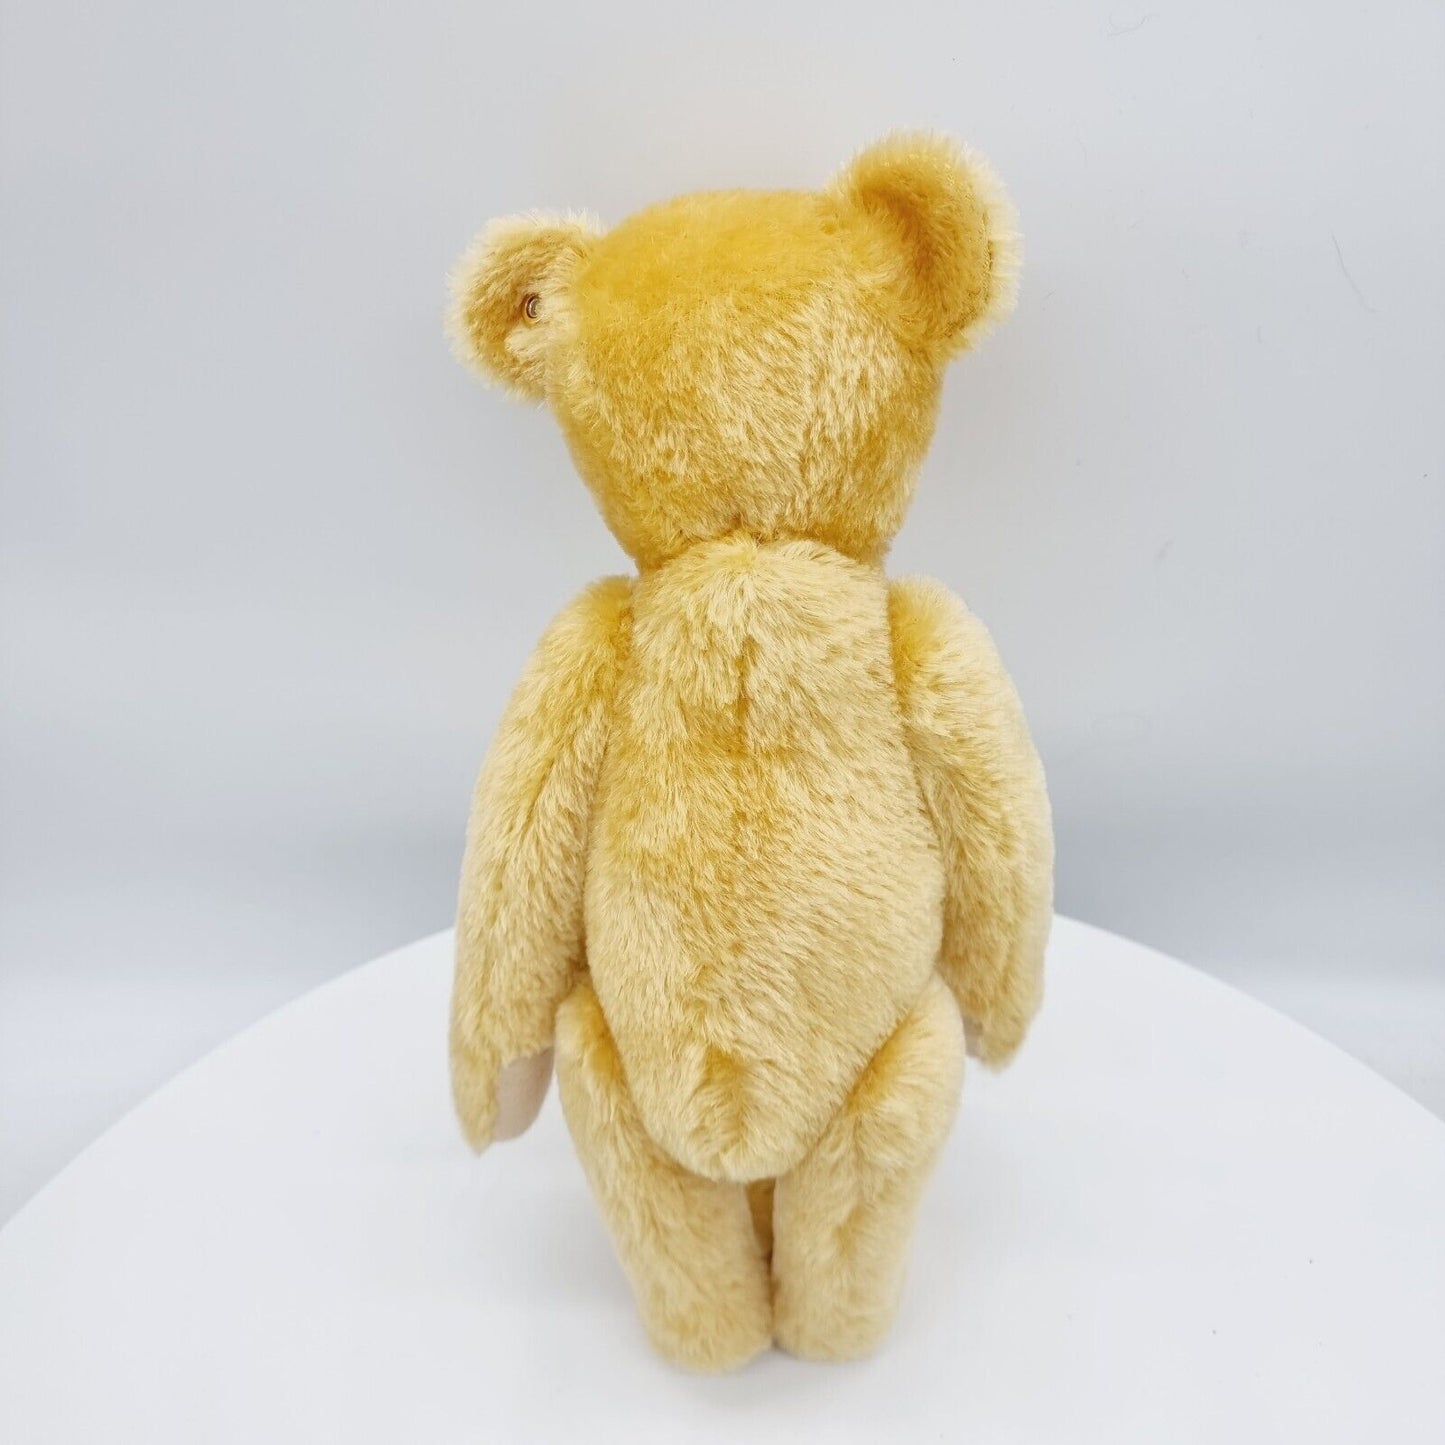 Steiff 406751 Teddybär 1908 gelb 35 cm limitiert 3000 Exemplare Jahr 2006